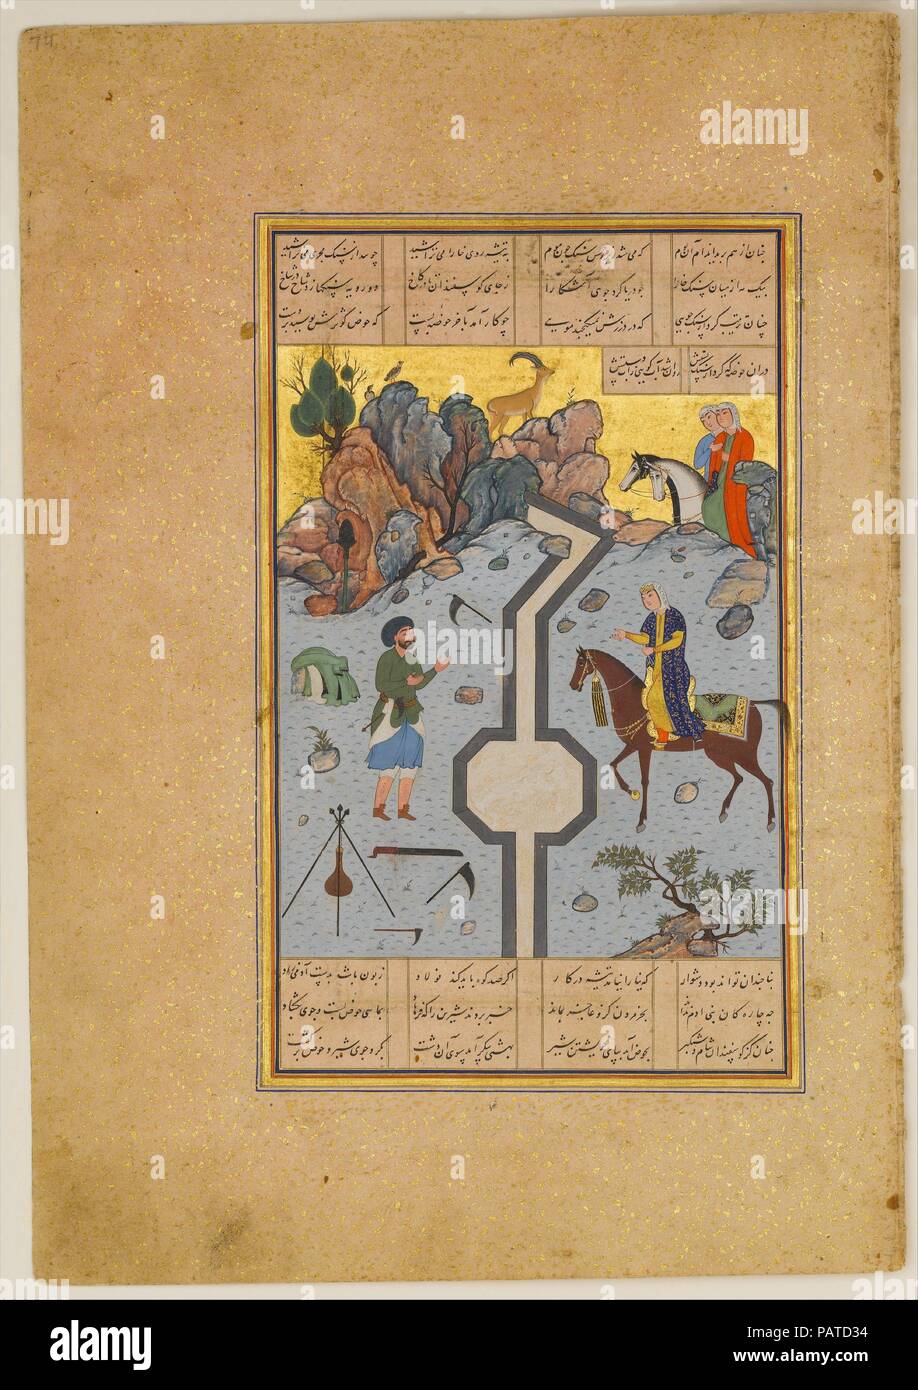 'Farhad Carves a Milk Channel for Shirin', Folio 74 from a Khamsa (Quintet) of Nizami. Artist: Painting by Shaikh Zada. Author: Nizami (Ilyas Abu Muhammad Nizam al-Din of Ganja) (probably 1141-1217). Calligrapher: Sultan Muhammad Nur (ca. 1472-ca. 1536); Mahmud Muzahhib. Dimensions: Painting: H. 8 3/8 in. (21.3 cm)   W. 5 1/16 in. (12.9 cm)  Page: H. 12 5/8 in. (32.1 cm)   W. 8 3/4 in. (22.2 cm)  Mat: H. 19 1/4 in. (48.9 cm)   W. 14 1/4 in. (36.2 cm). Date: A.H. 931/A.D. 1524-25.  In Nizami's tale of Khusrau and Shirin, the princess Shirin has an ardent admirer in the talented sculptor and sto Stock Photo